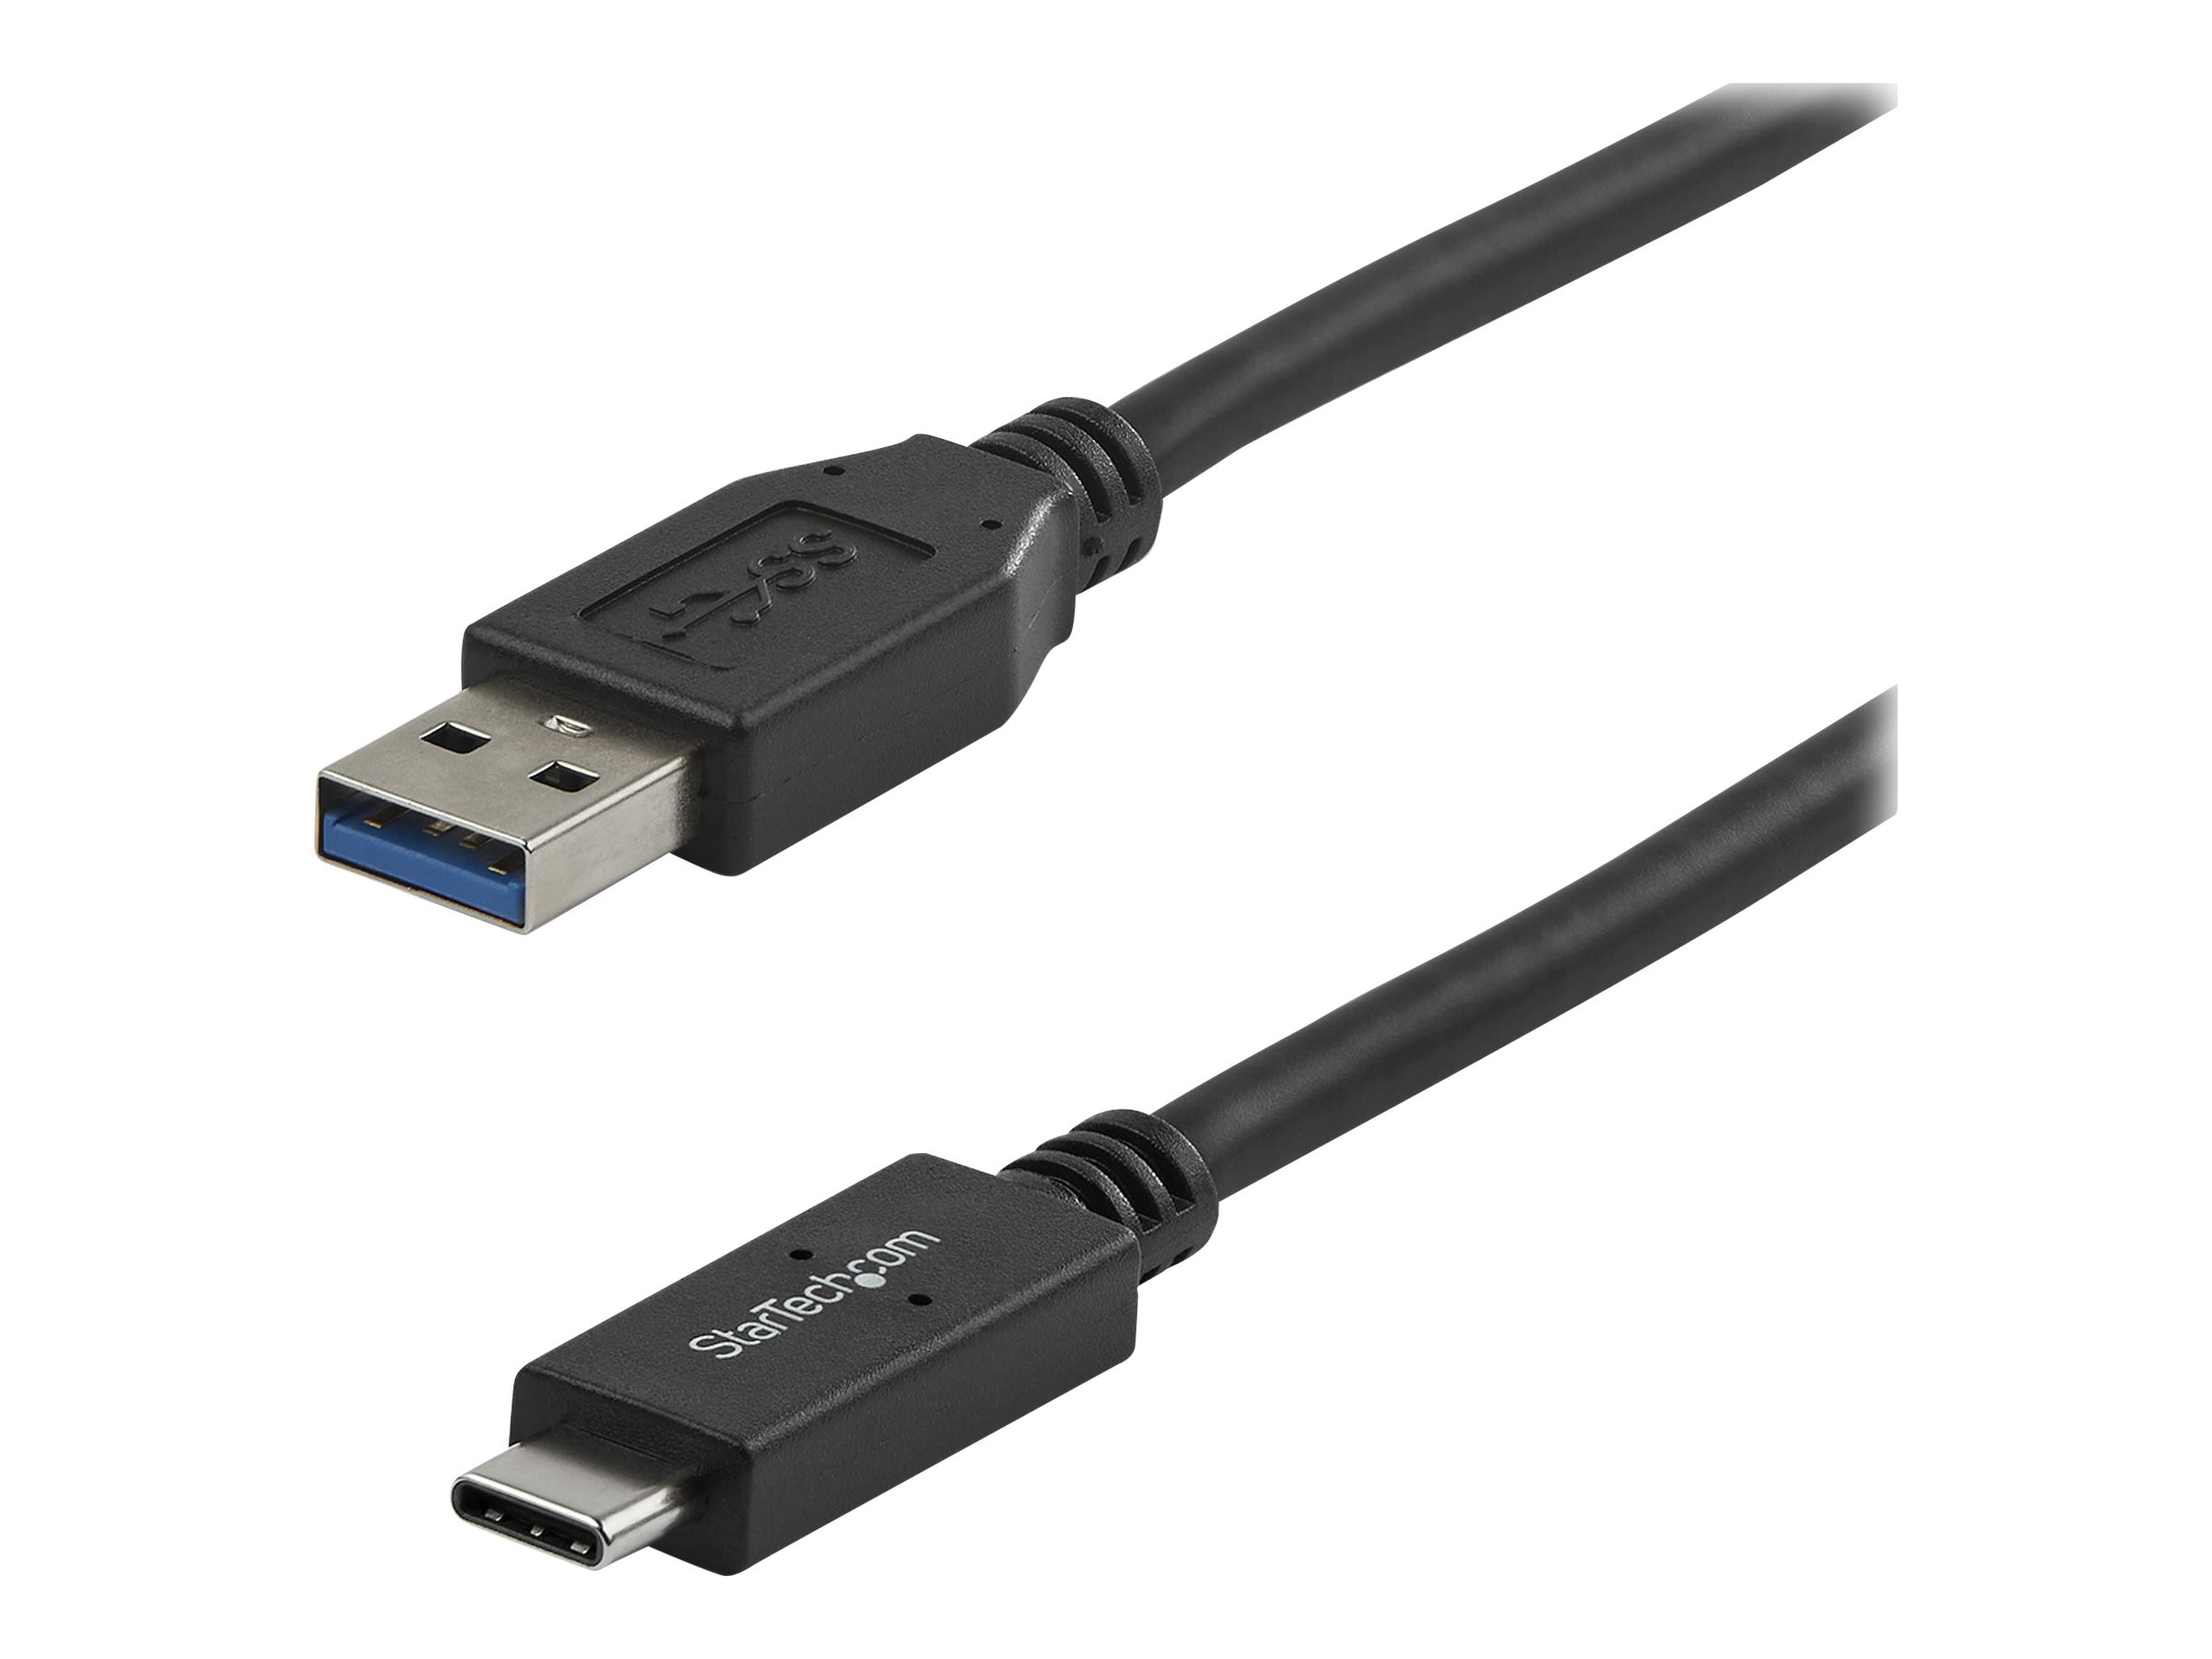 Cable USB-C a USB-C Samsung, 3 Amp, 1 m / 3.3 ft